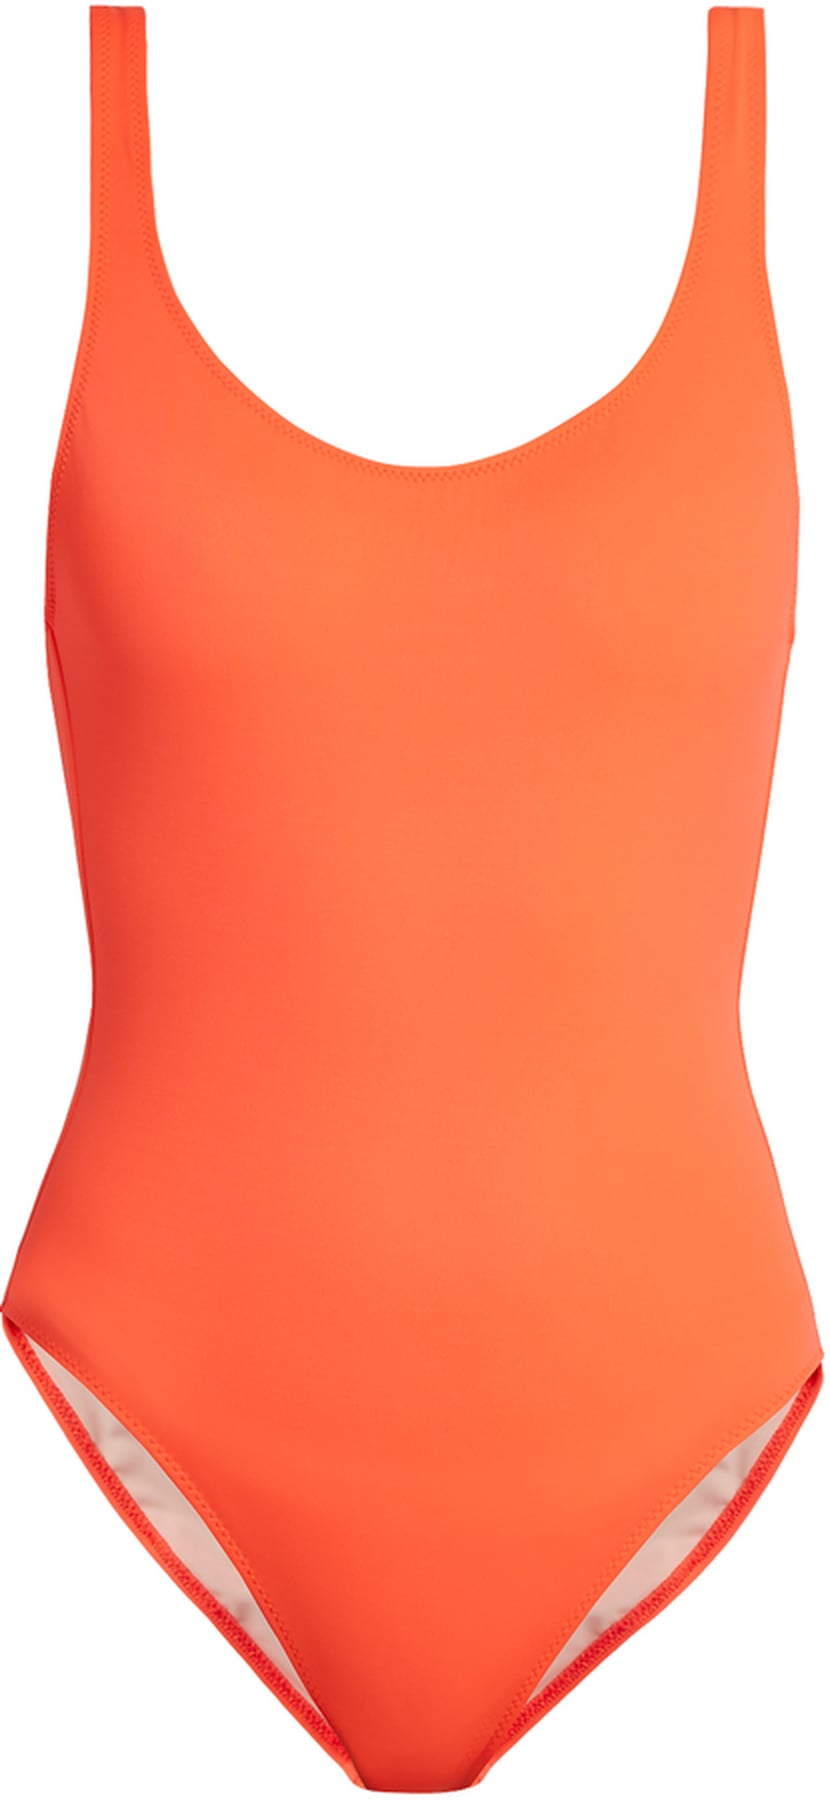 Emma Roberts Orange Adriana Degreas Swimsuit | POPSUGAR Fashion